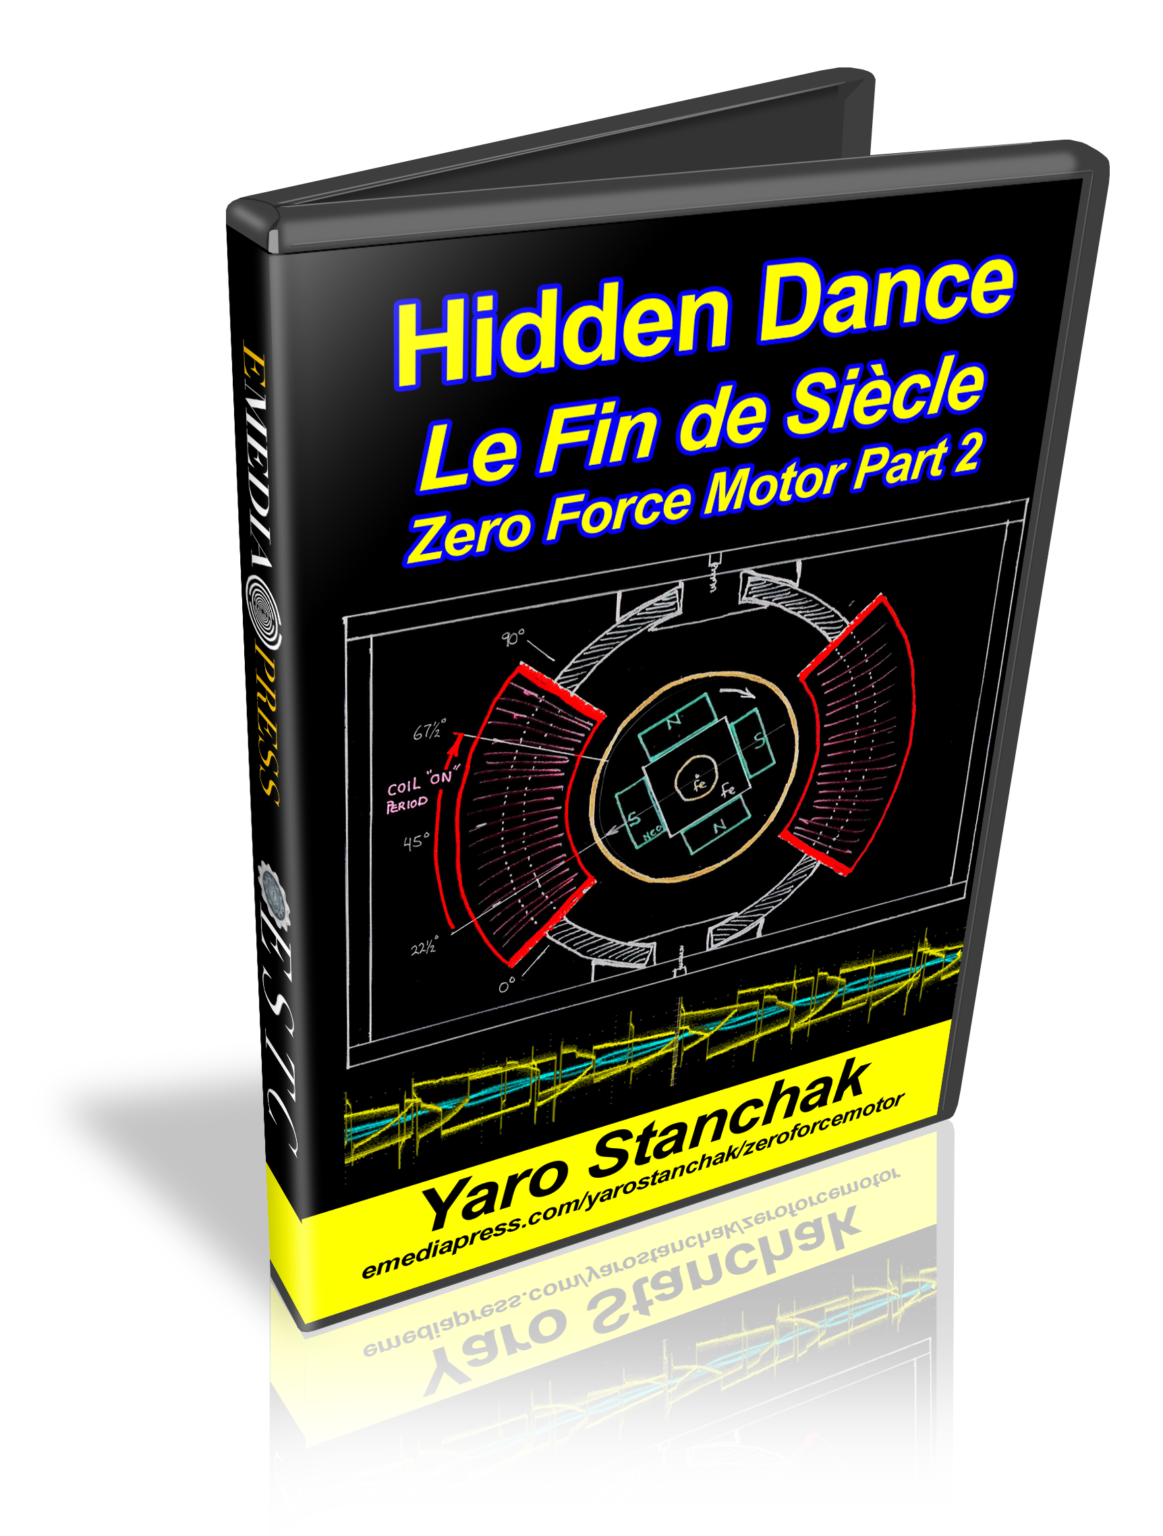 Hidden Dance - Zero Force Motor Part 2 by Yaro Stanchak